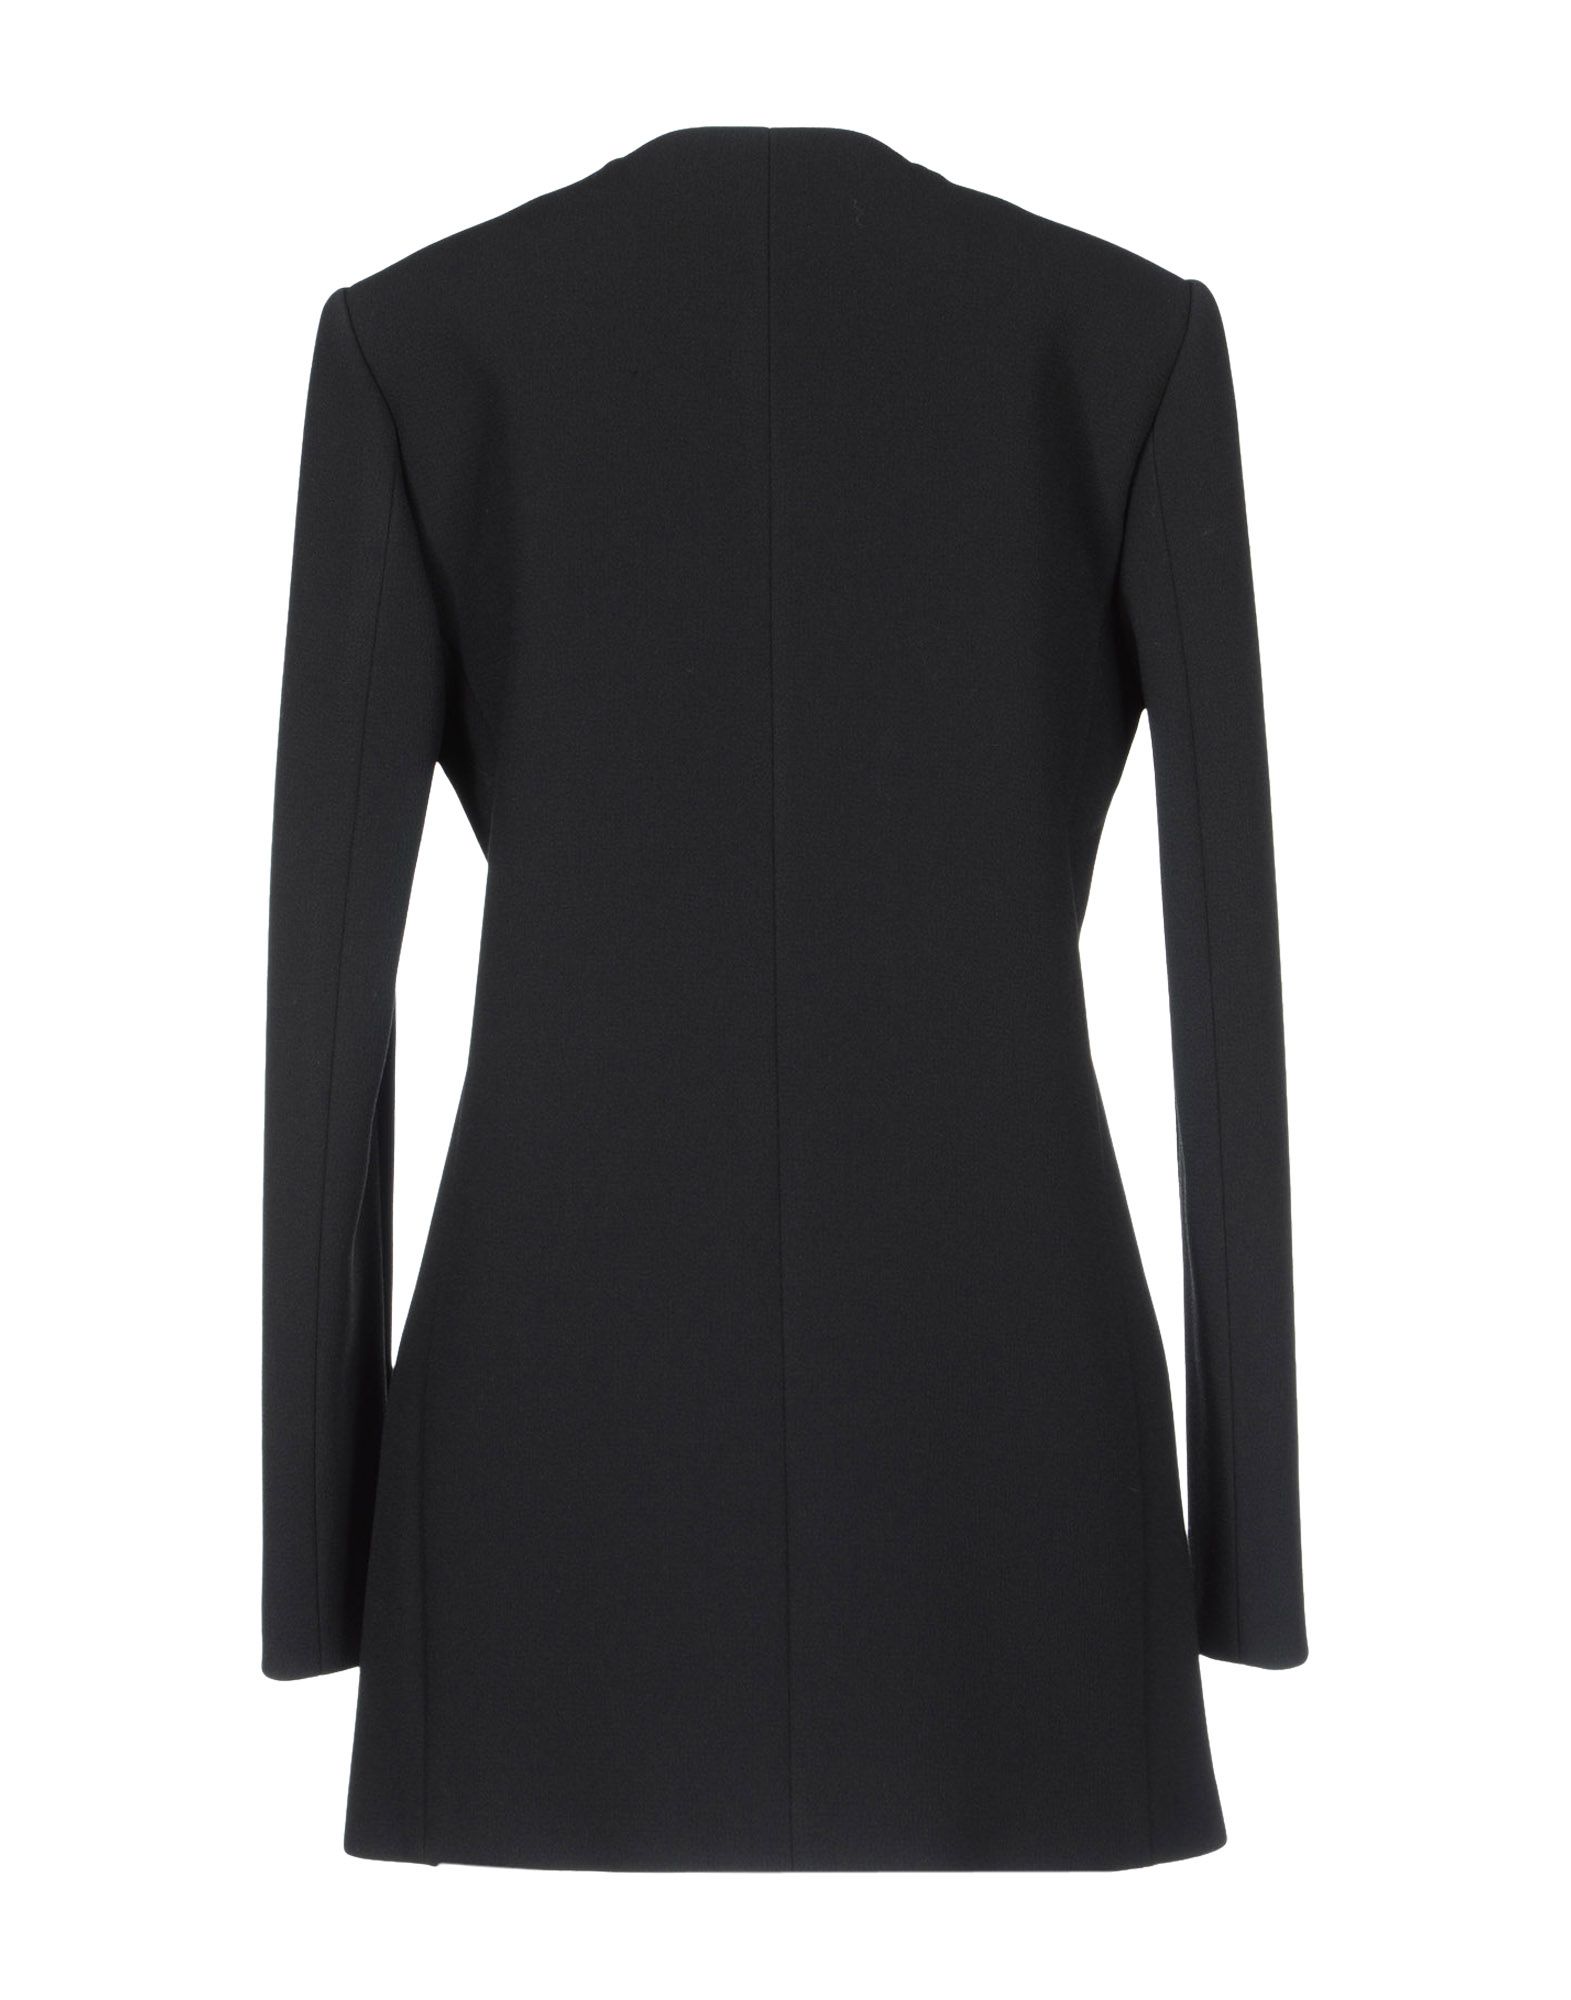 Céline Fulllength Jacket in Black - Lyst